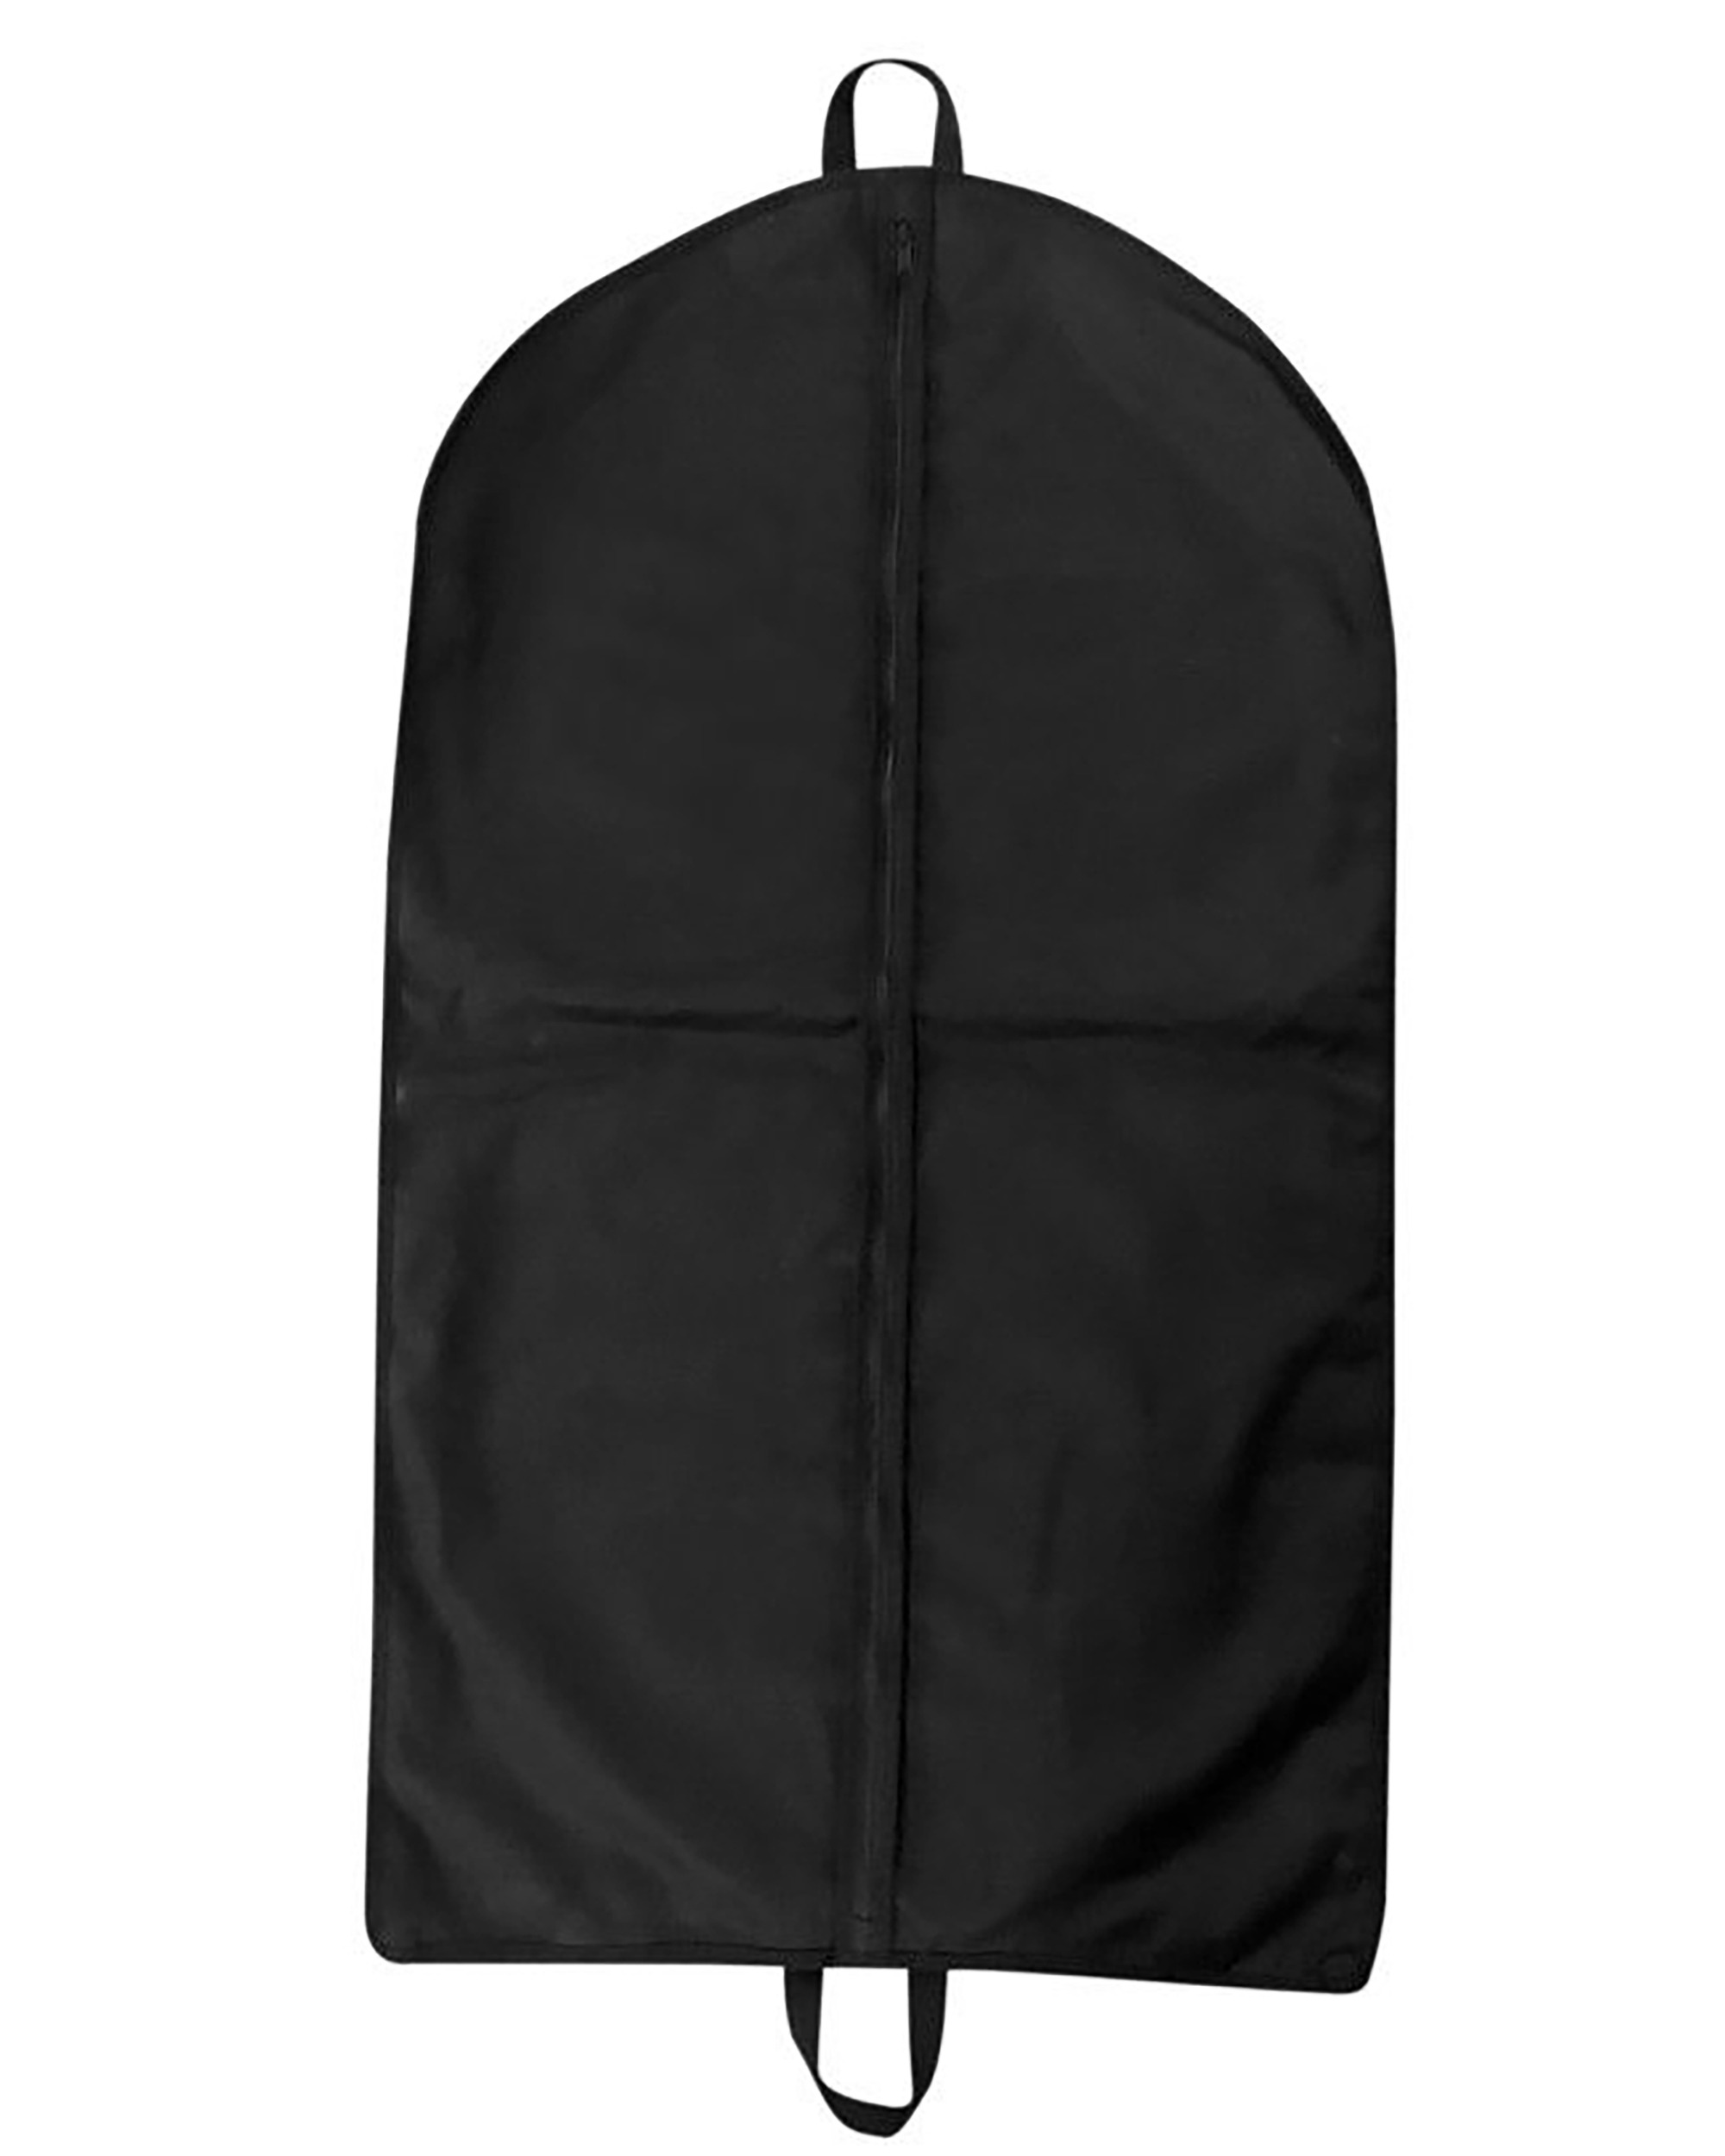 Liberty Bags 9007A Gusseted Garment Bag